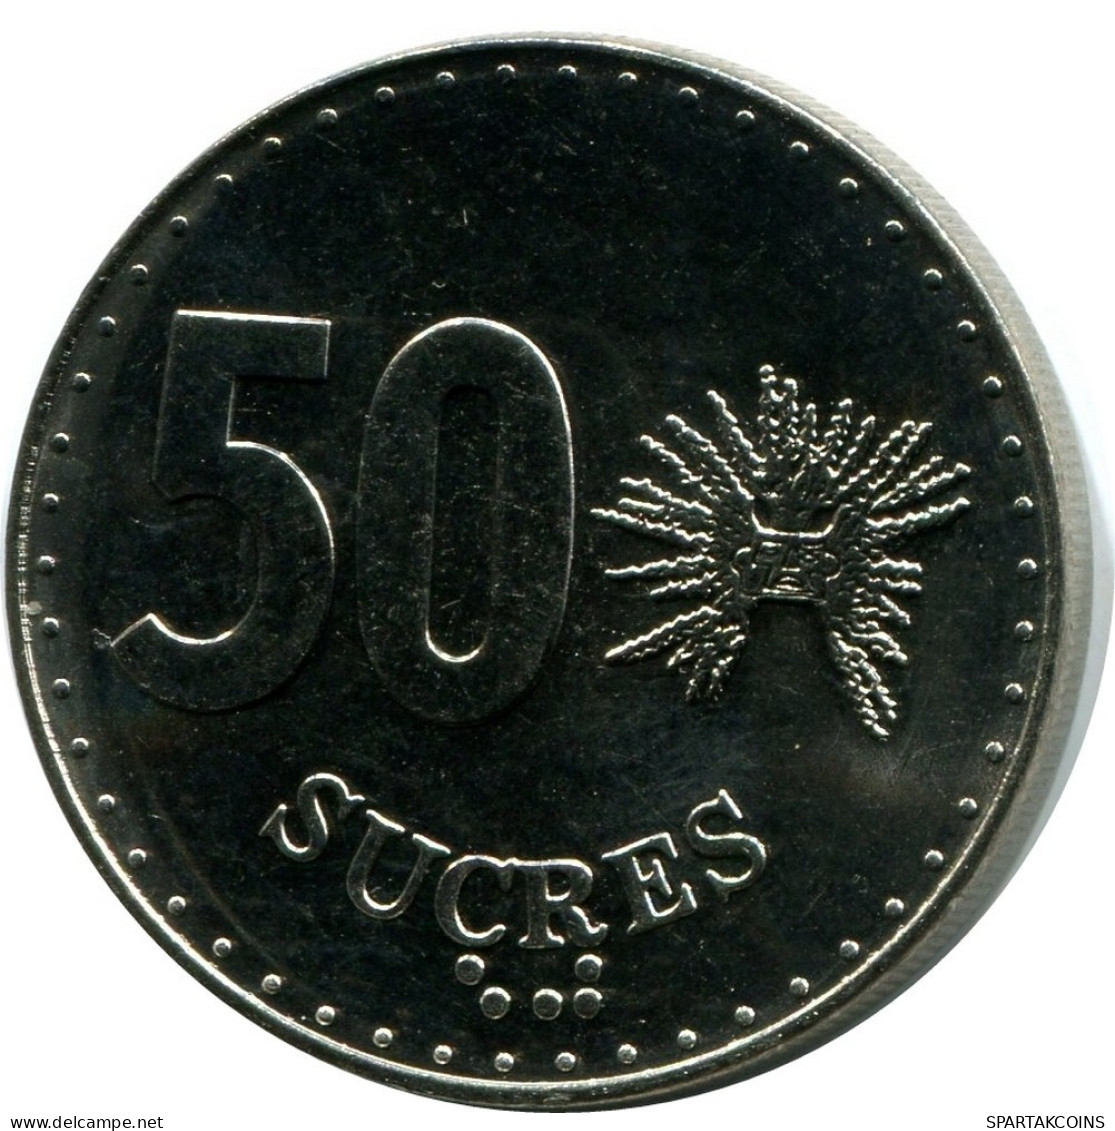 50 SUCRE 1991 ECUADOR UNC Coin #M10153.U.A - Ecuador